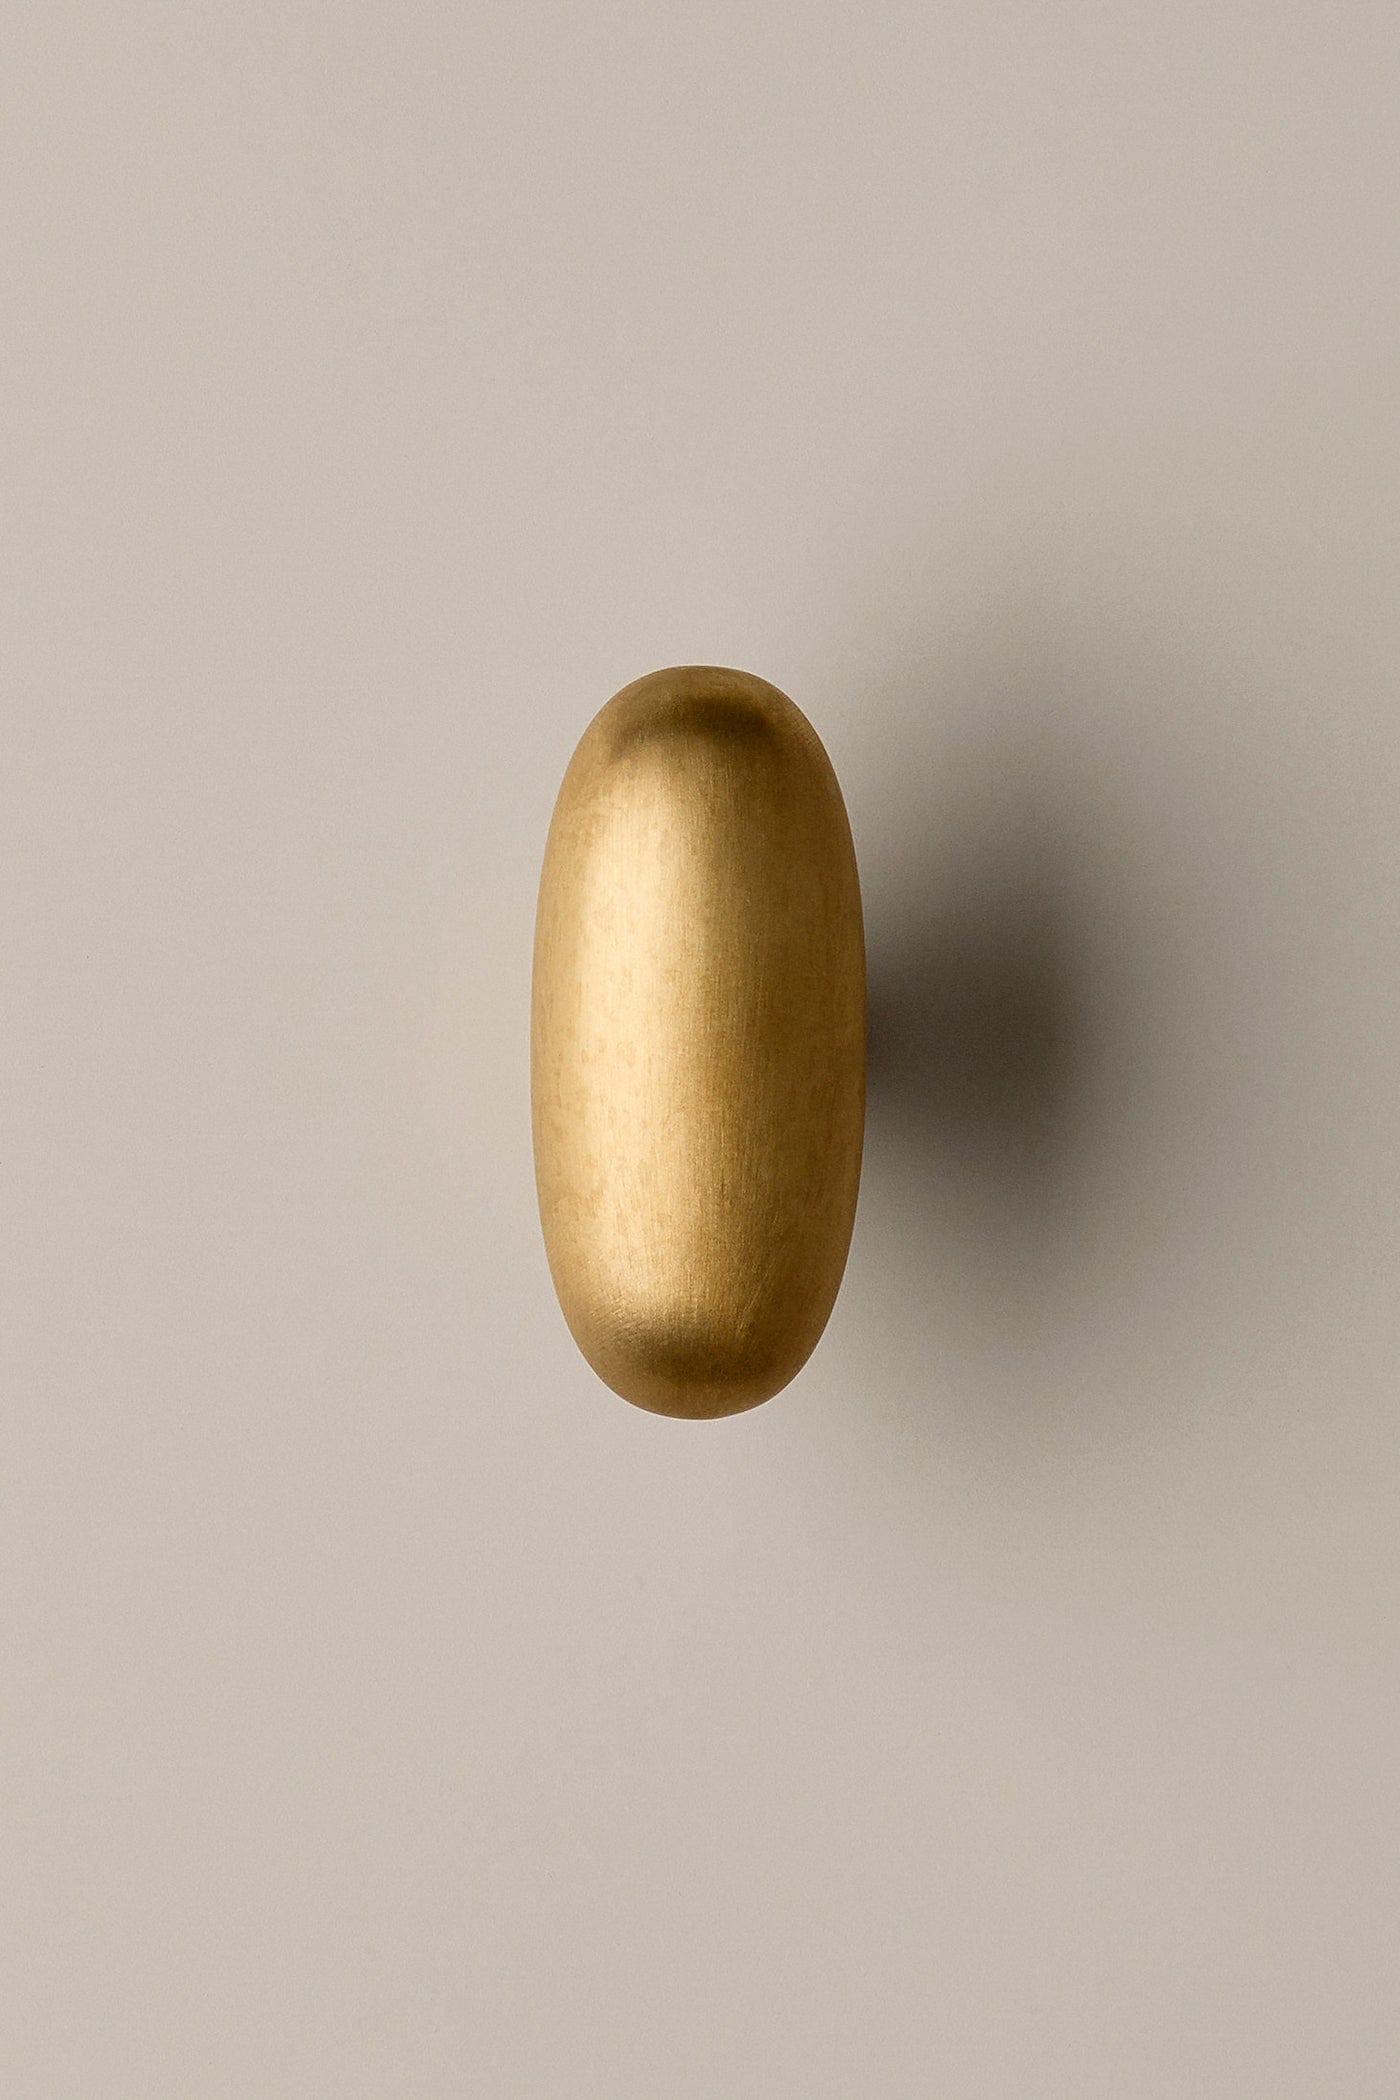 Blunt Amber Brass - Knob Decorative Objects